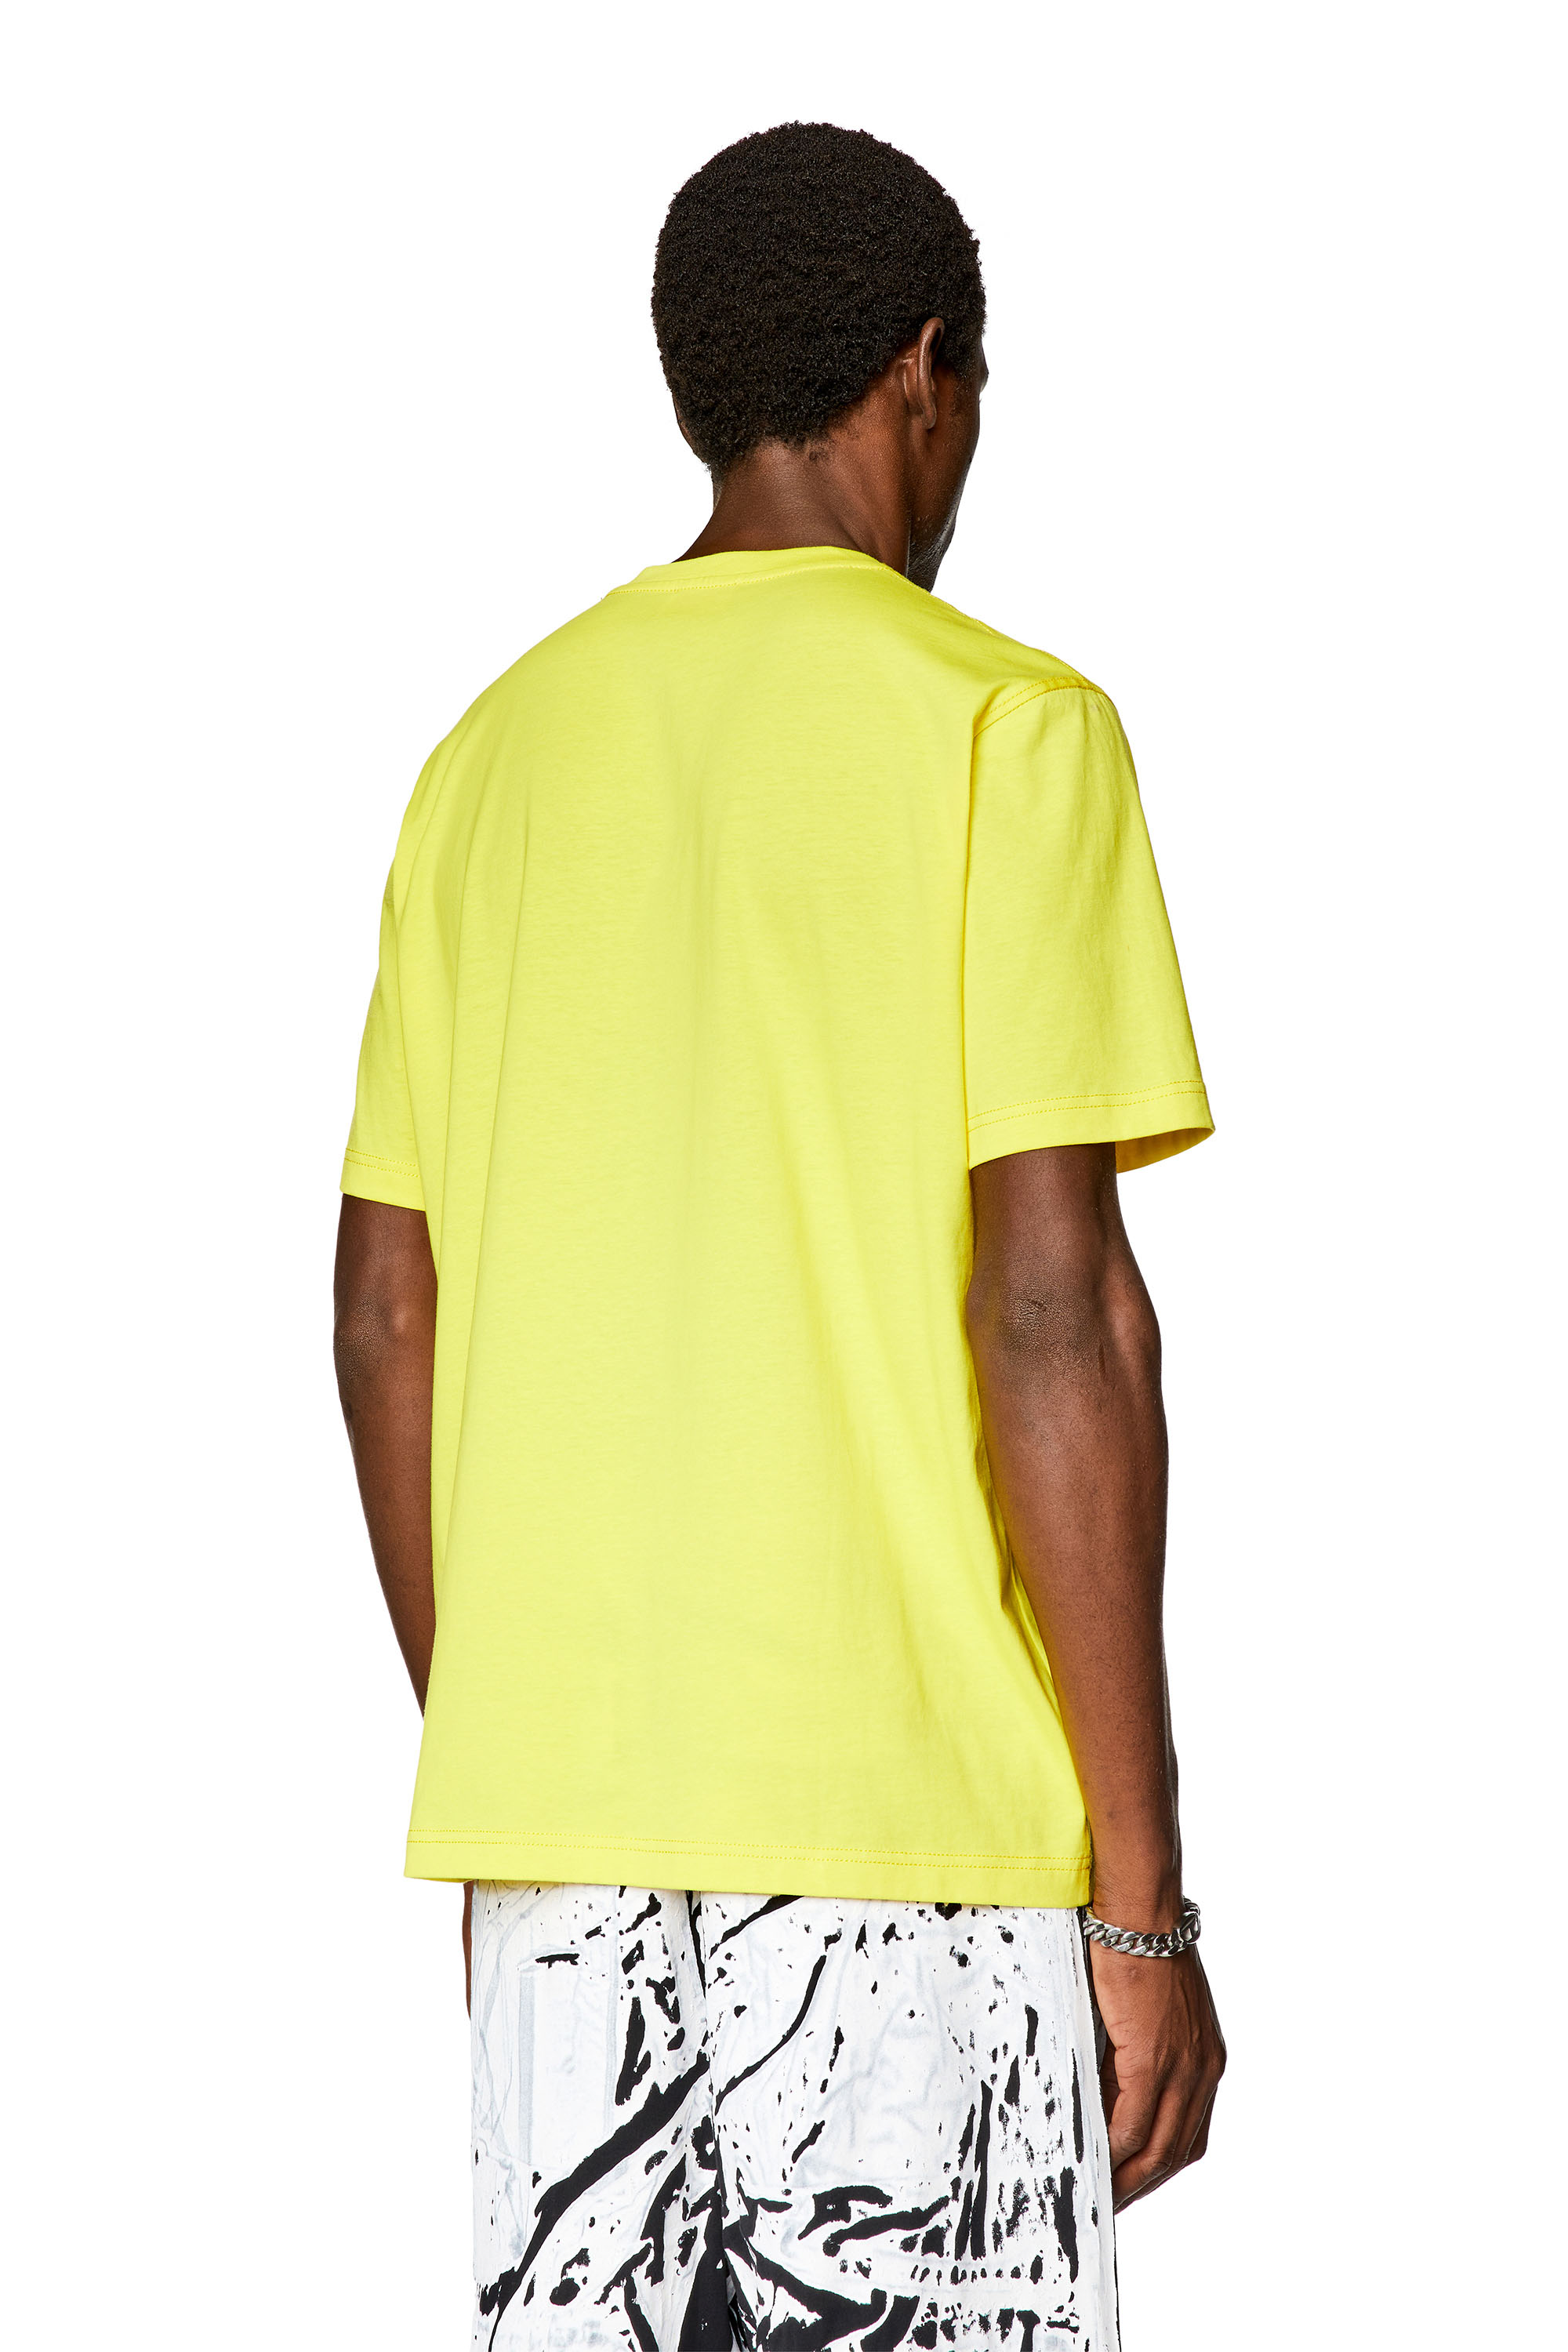 Diesel - T-JUST-N10, Man T-shirt with contrasting Diesel prints in Yellow - Image 2